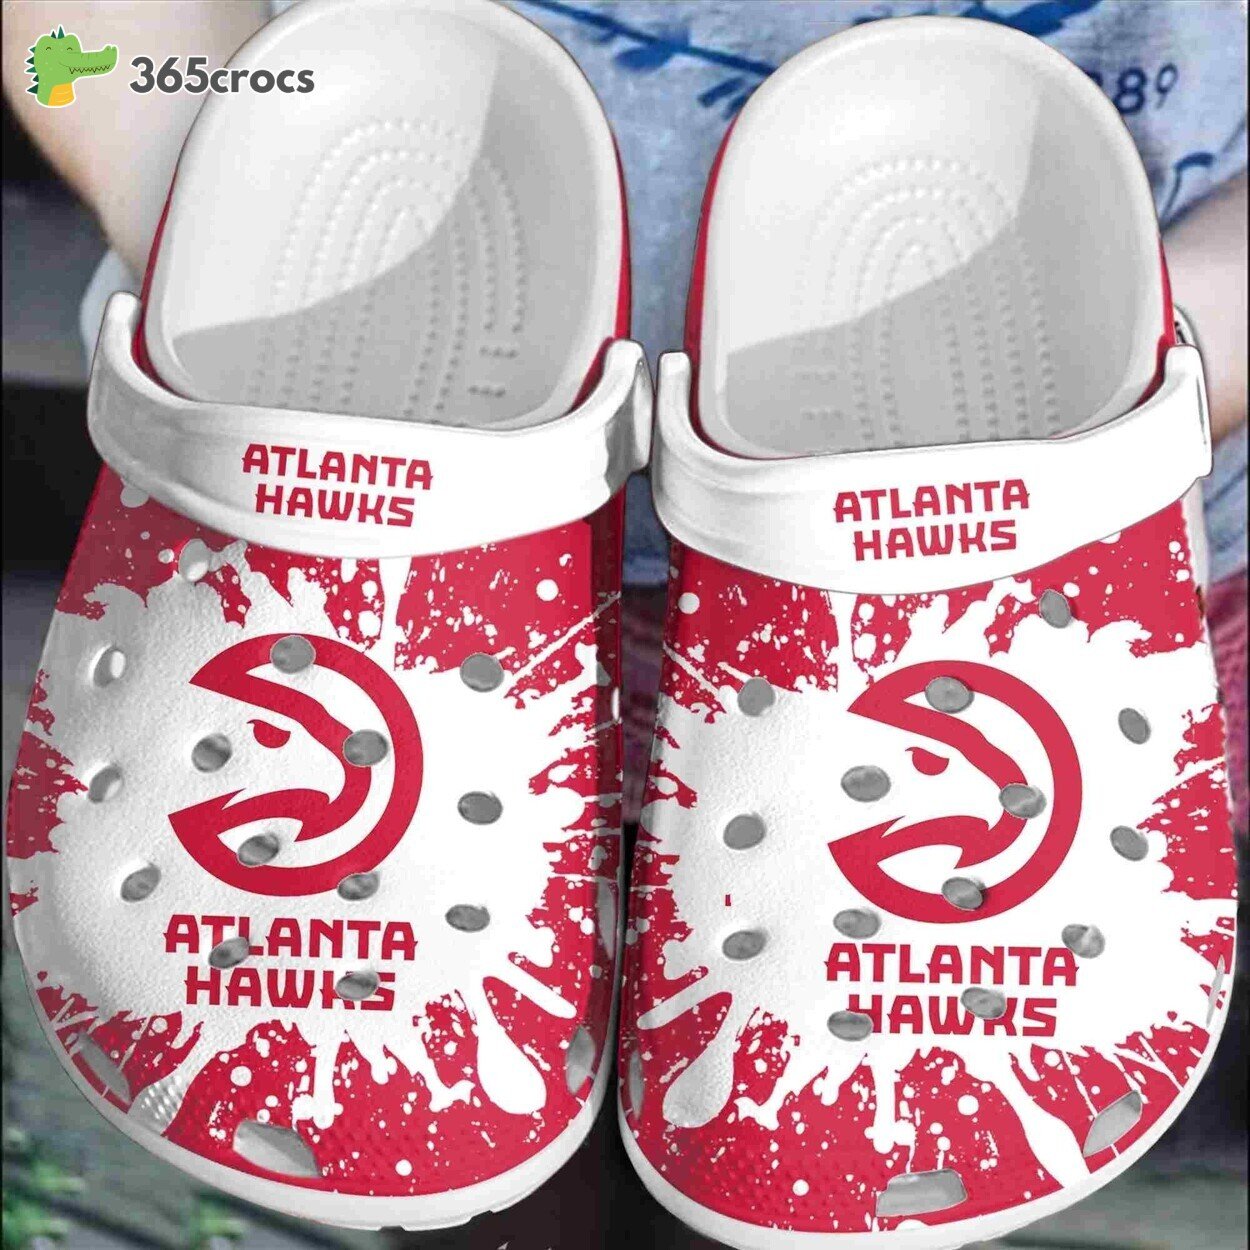 Atlanta Hawks Basketball Fans’ Go To Comfortable Crocss Clog Shoes